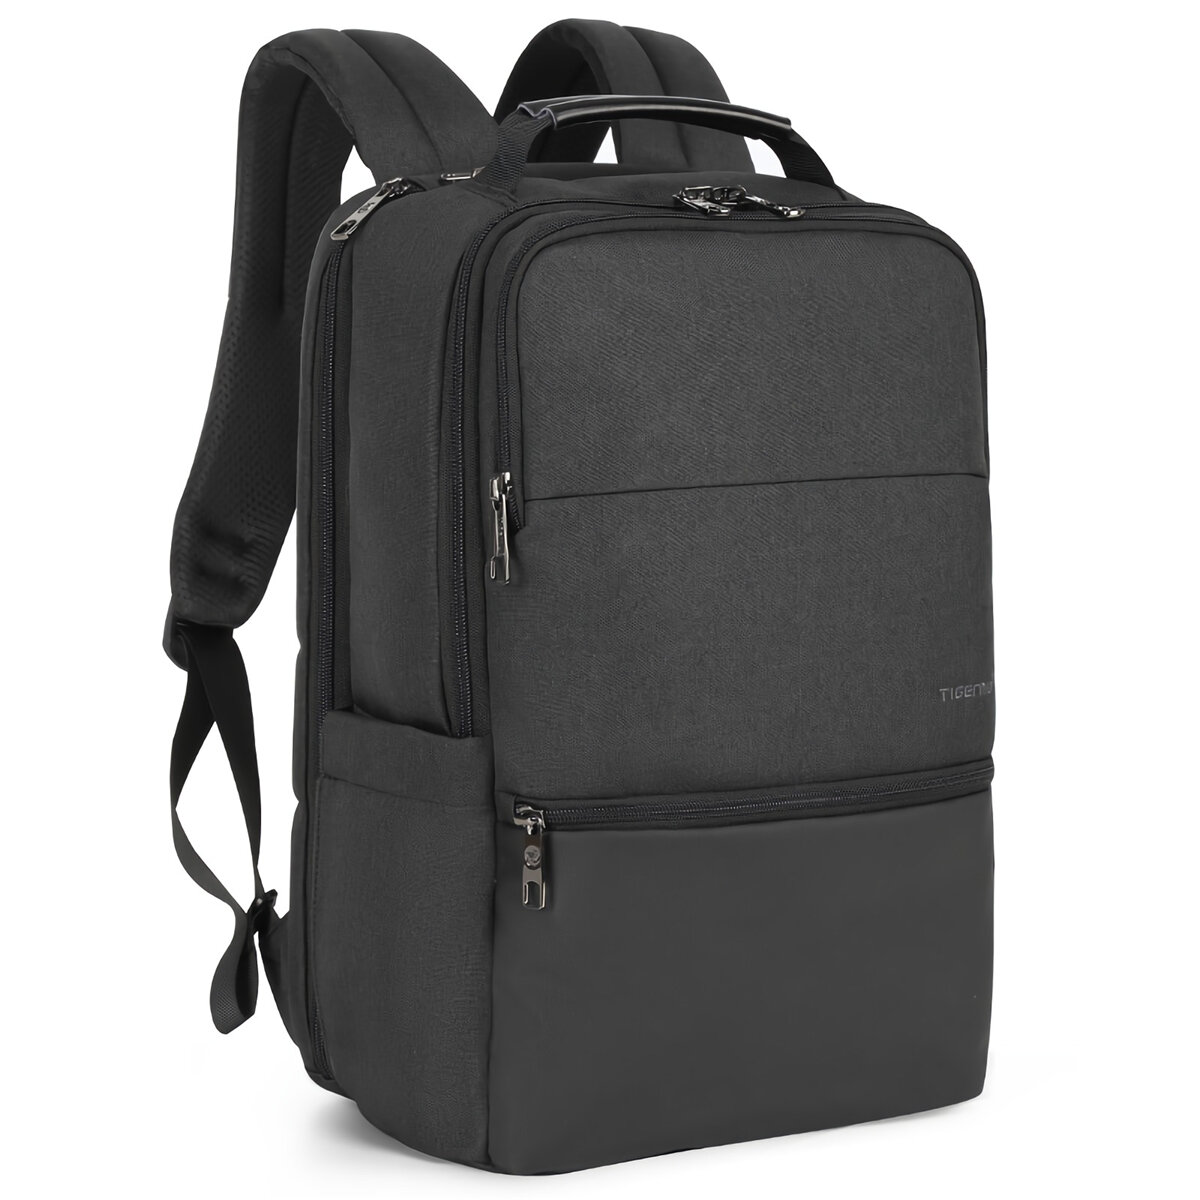 TIGERNU T-B3905 USB Charging Backpack Men Laptop Bag Business Travel Anti-thief Shoulder Backpack fo